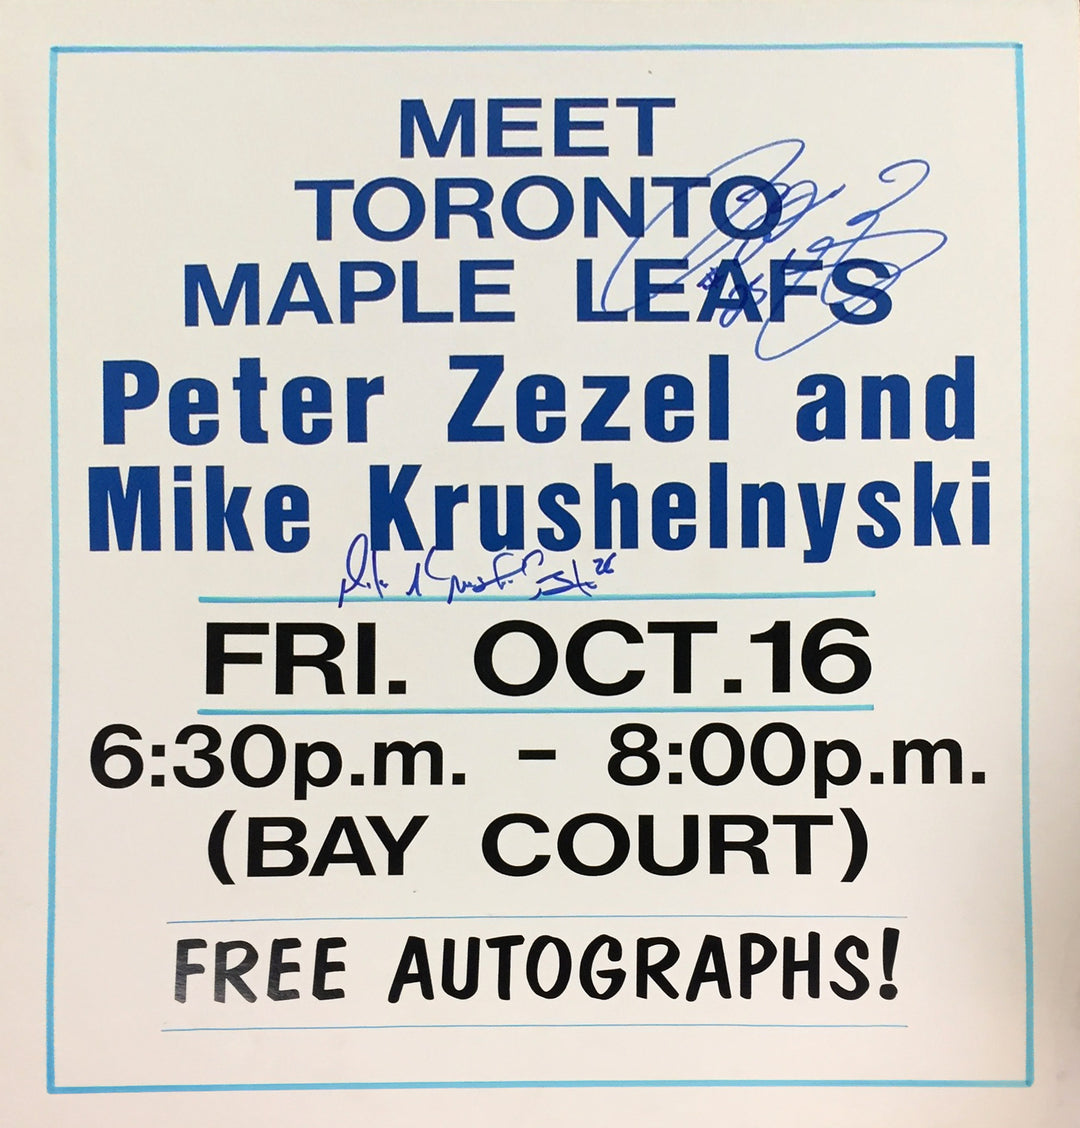 Peter Zezel, Mike Krushelnyski Autographed Vintage Sign Toronto Maple Leafs, Toronto Maple Leafs, NHL, Hockey, Autographed, Signed, AAVSH31855